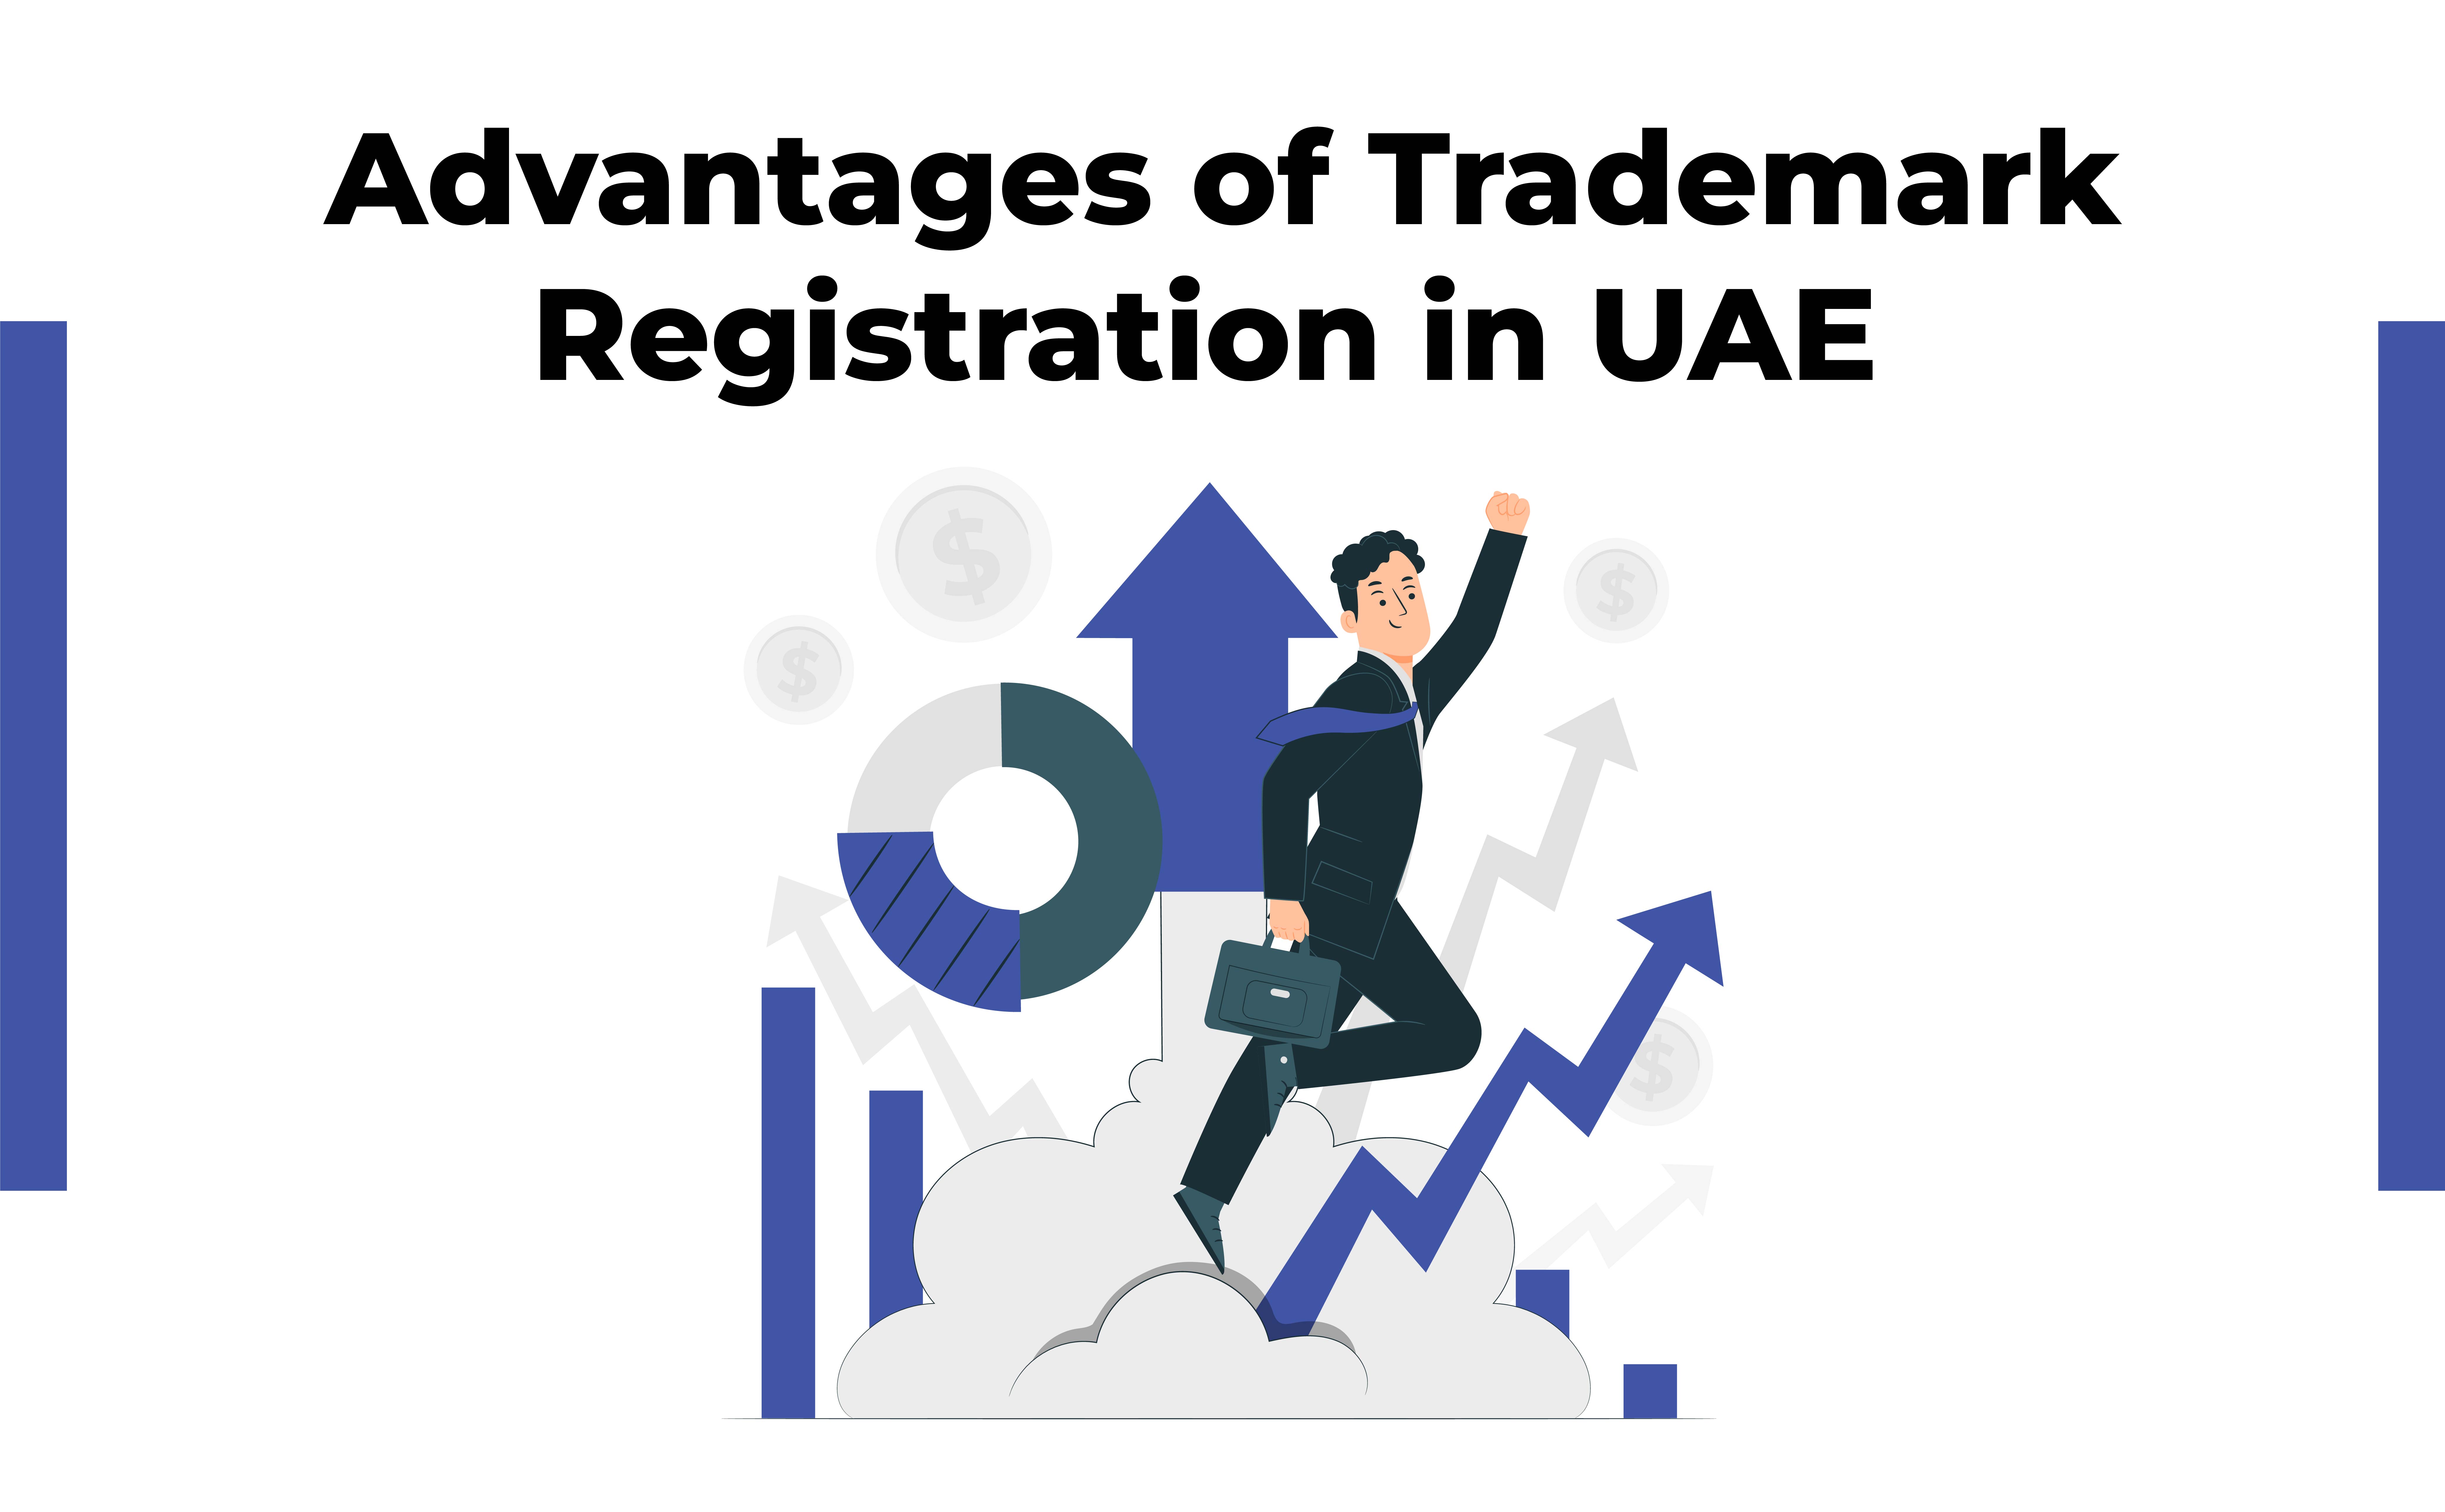 Advantages of trademark registration in UAE